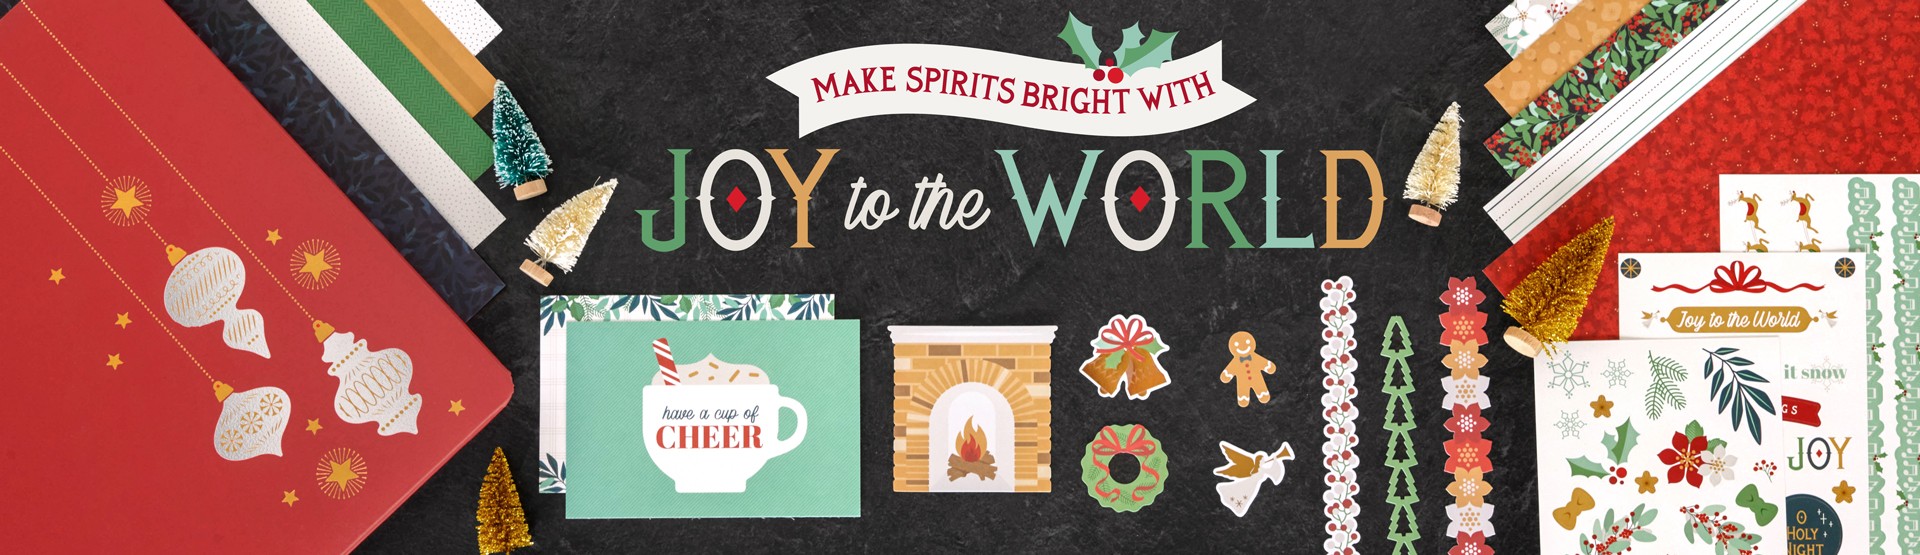 Christmas Scrapbooking Supplies: Joy to the World